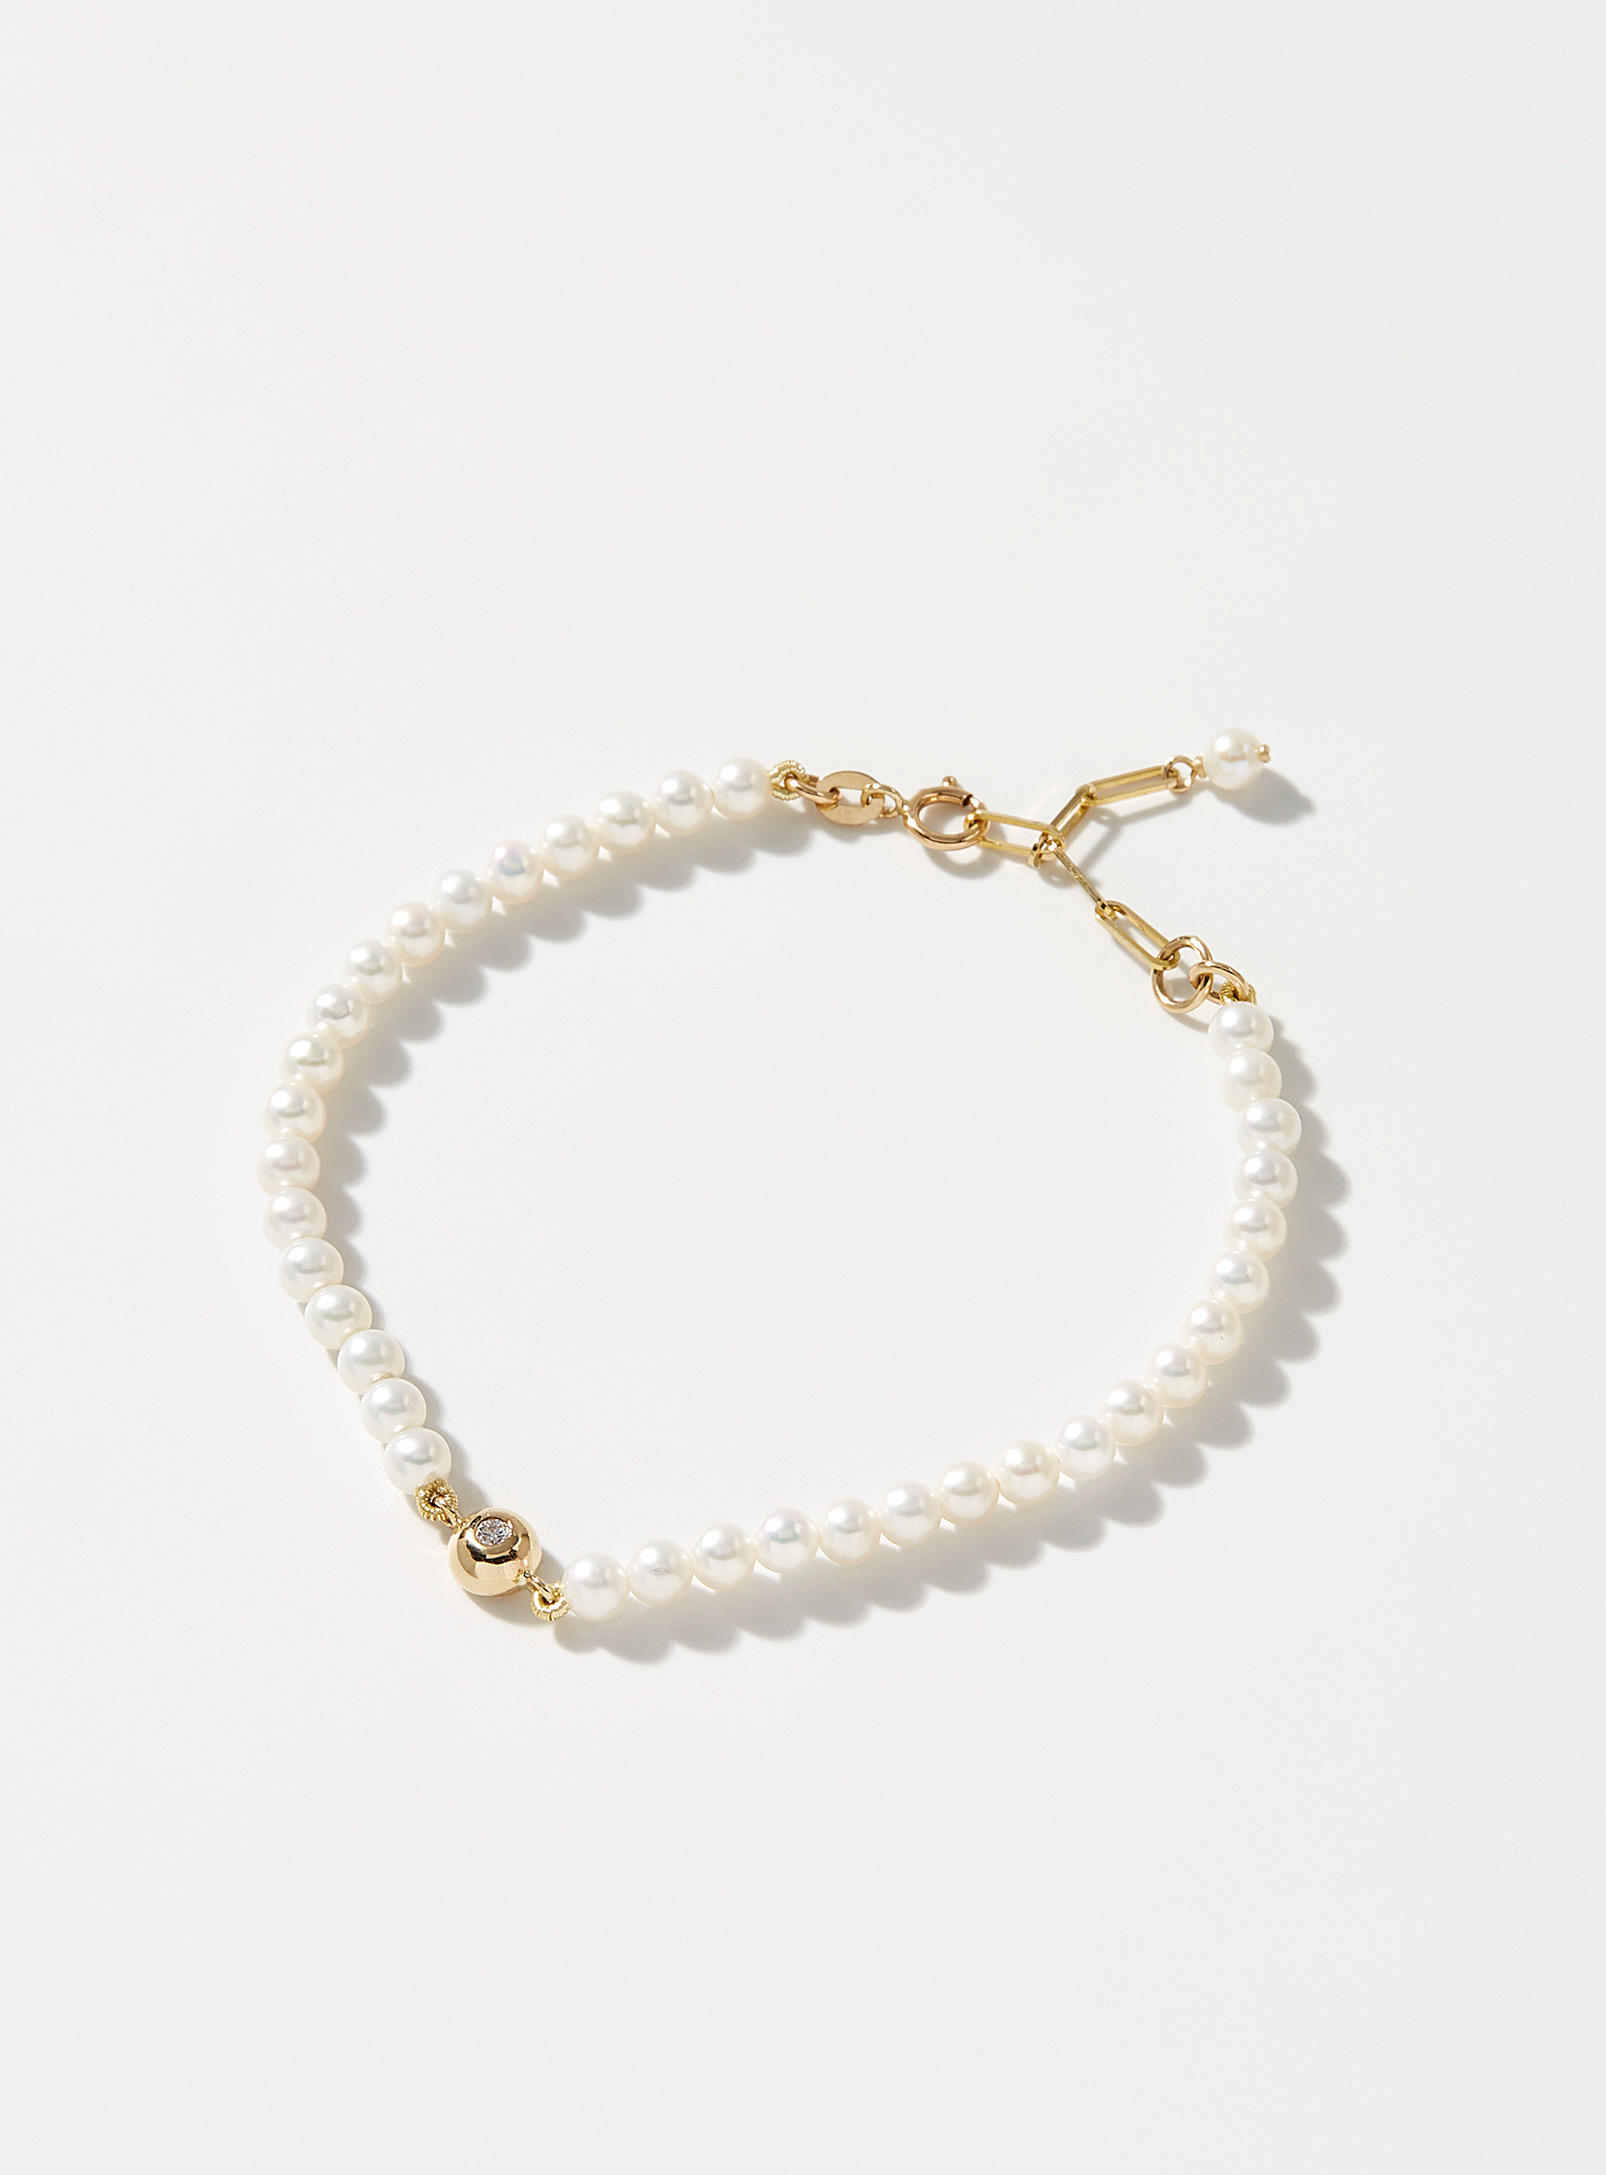 Poppy Finch - Le bracelet de perles minidiamant